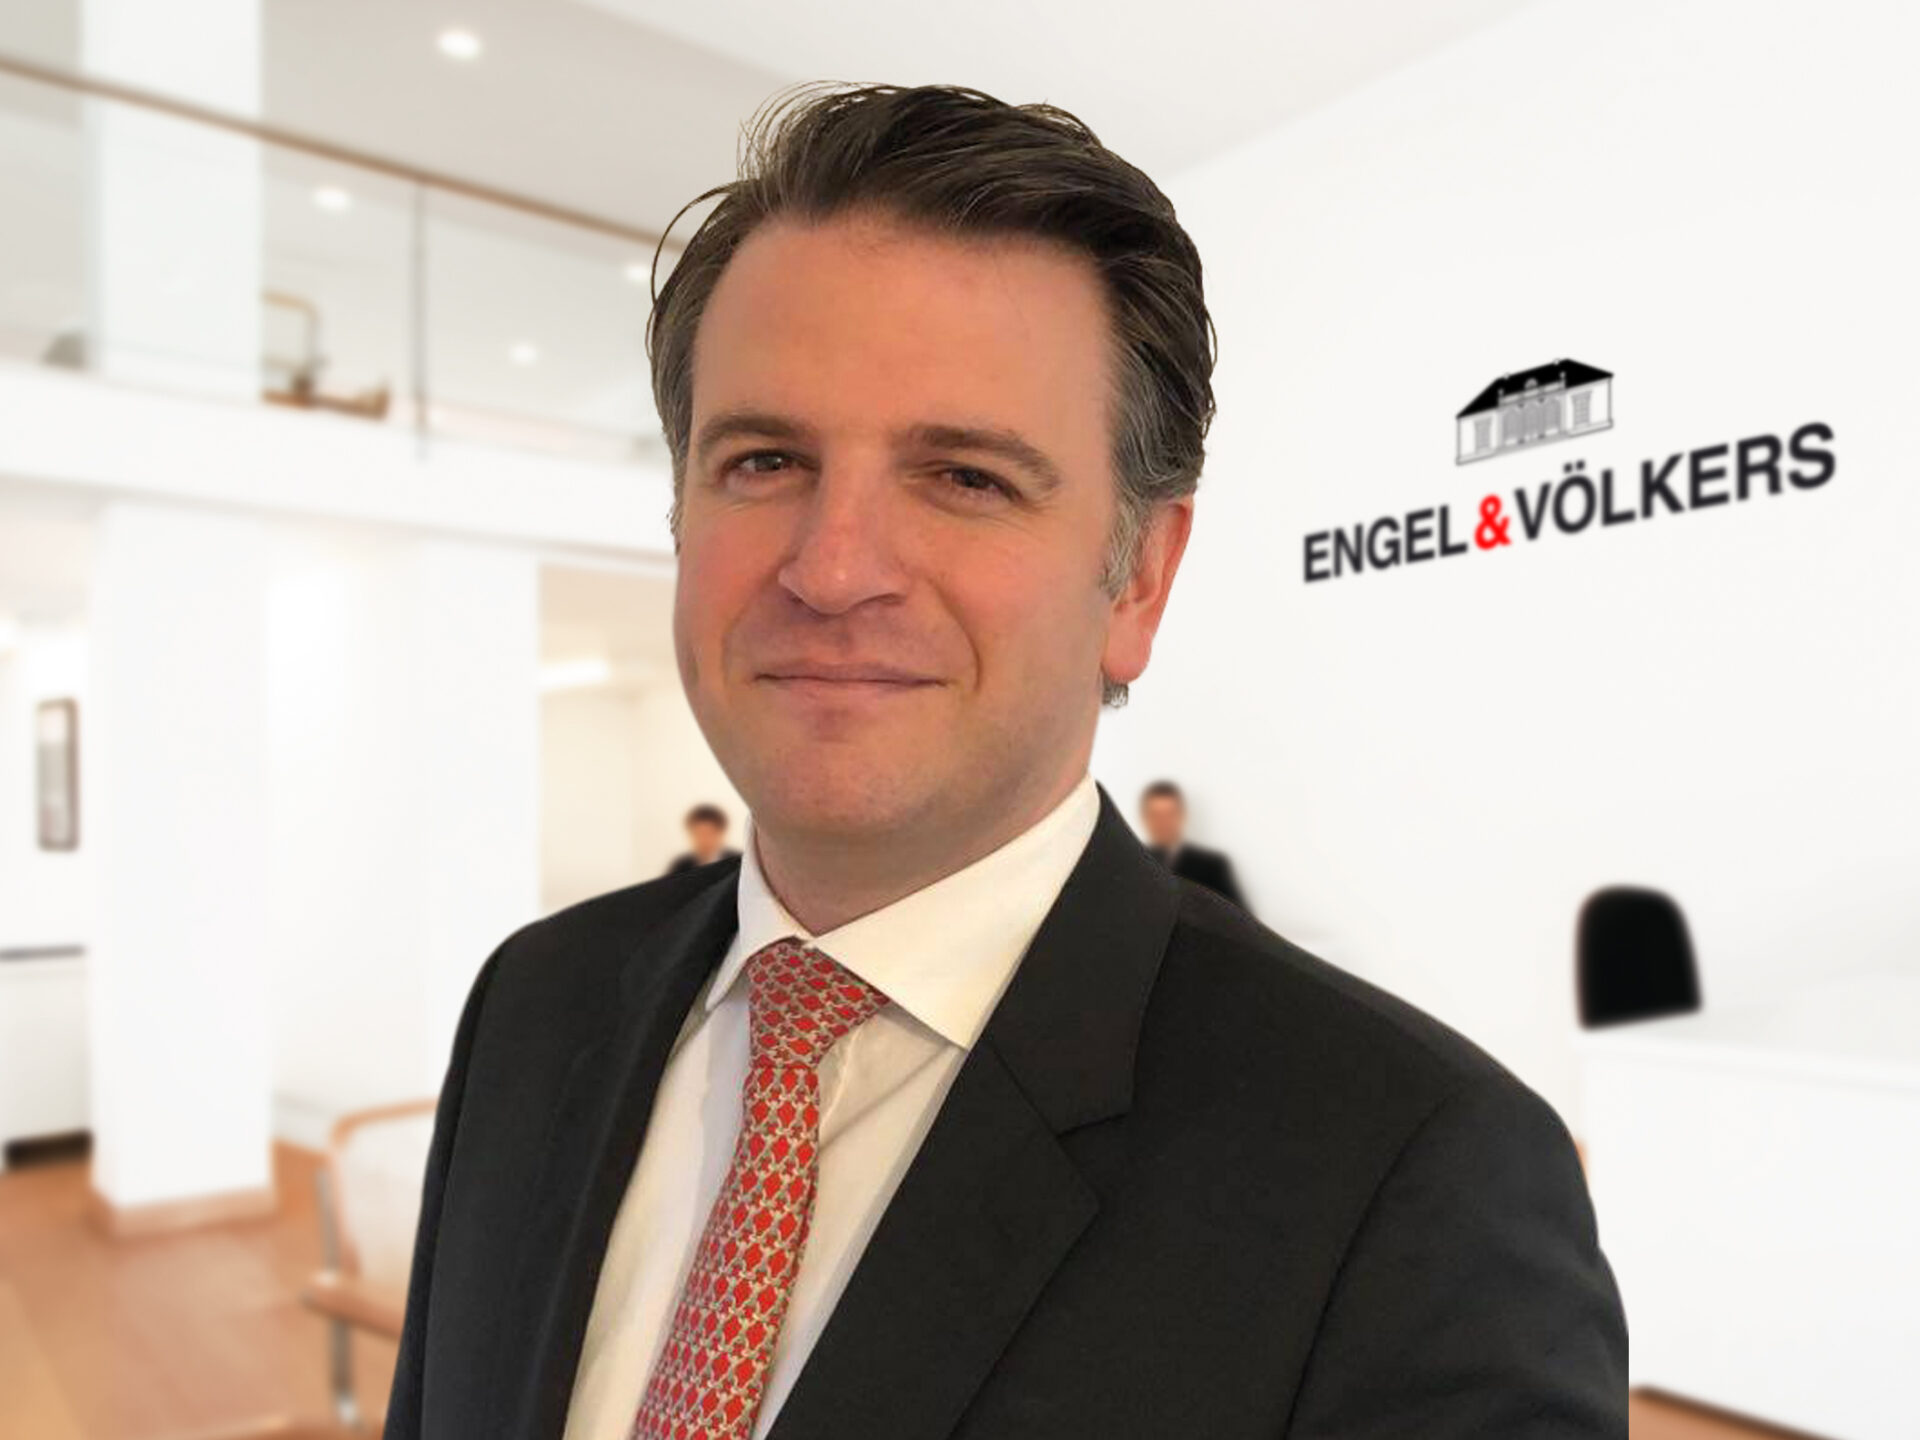 Interview with Kevin Rentmeesters, Engel & Völkers Belgium